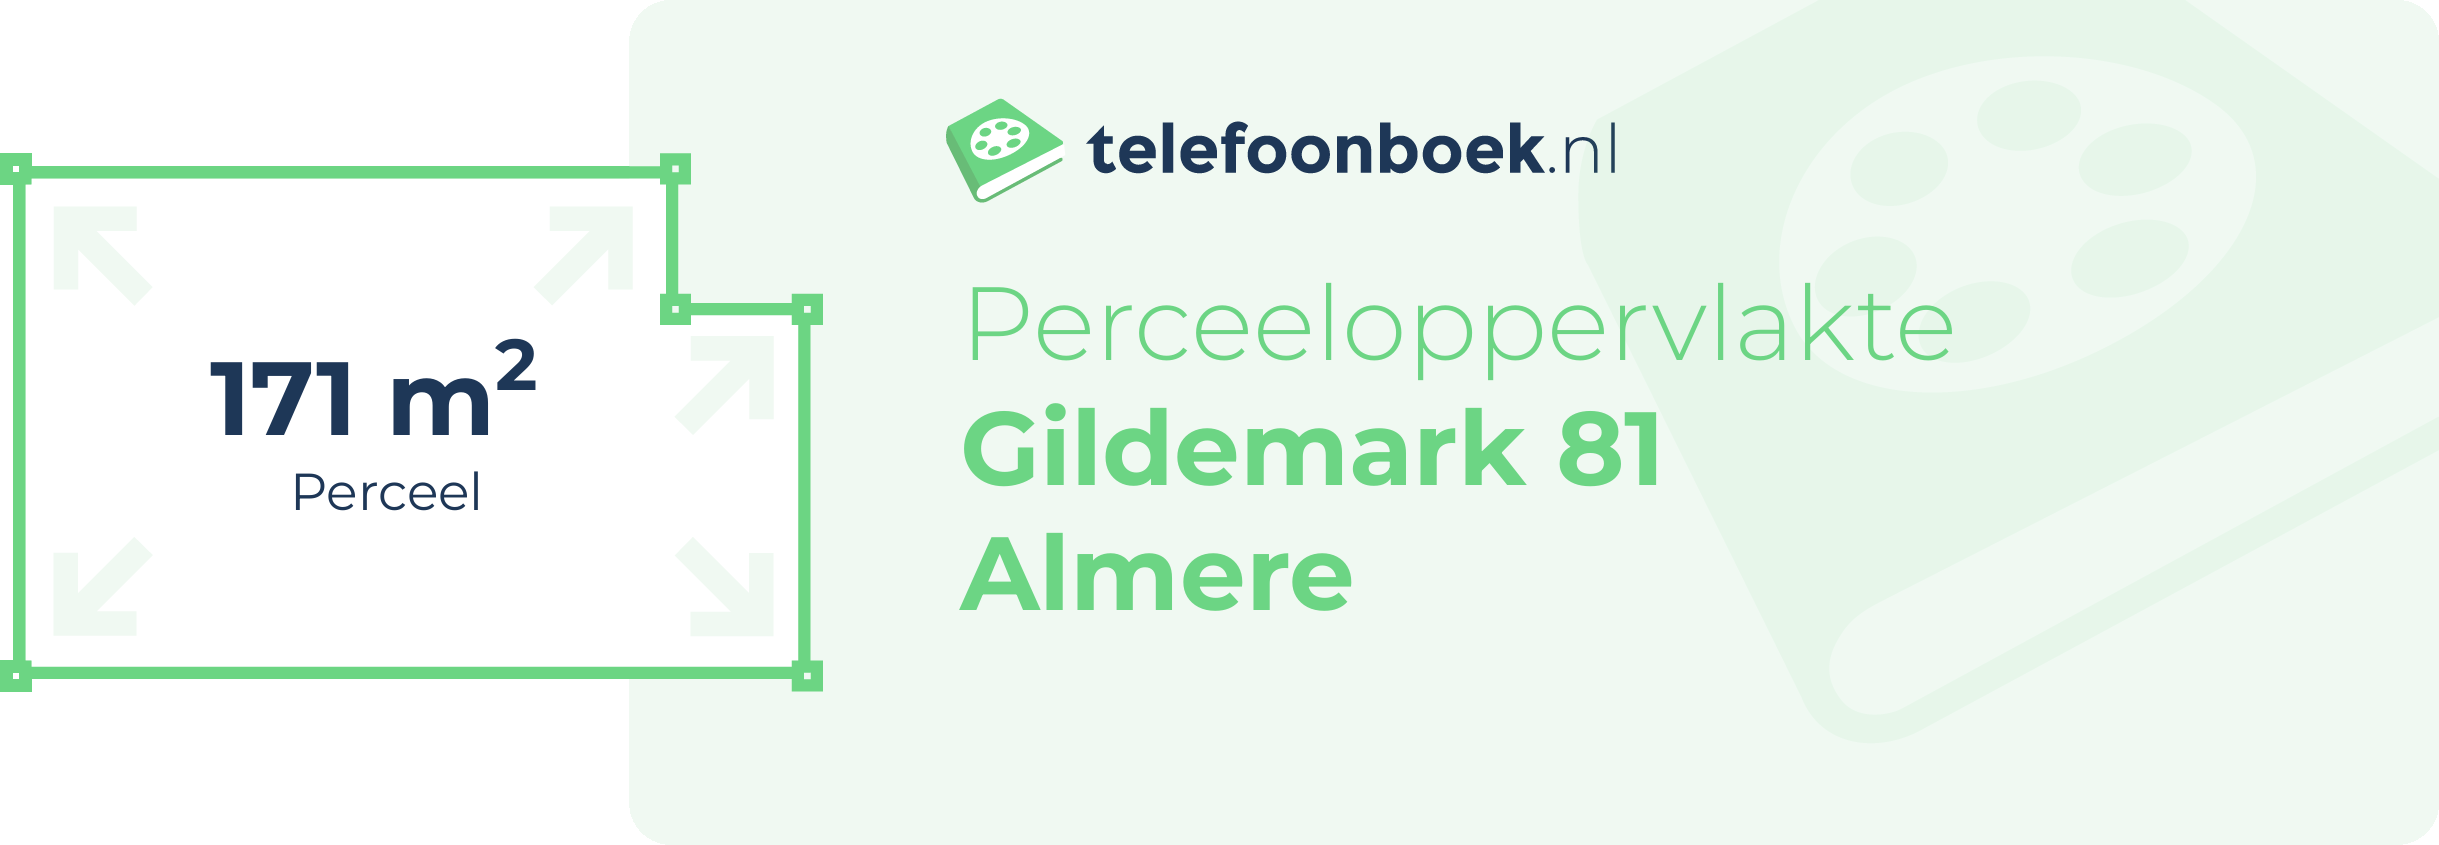 Perceeloppervlakte Gildemark 81 Almere